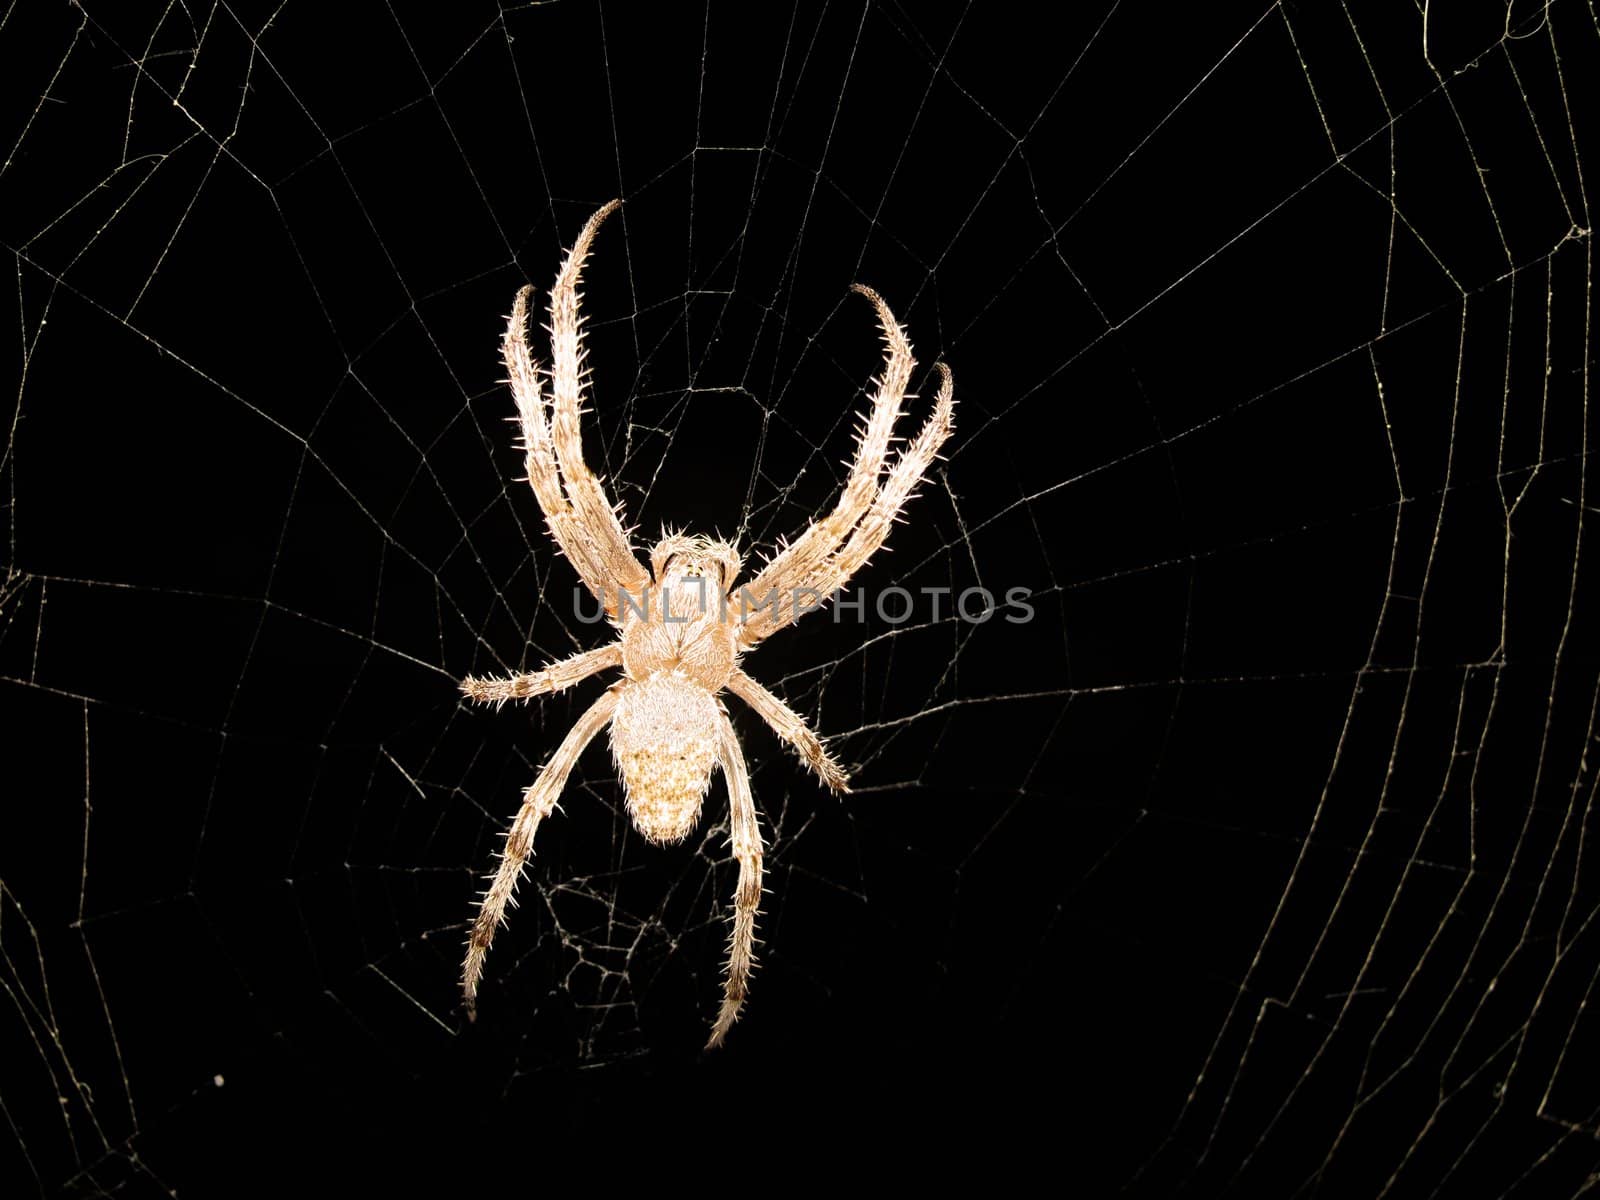 spider on cobweb over black